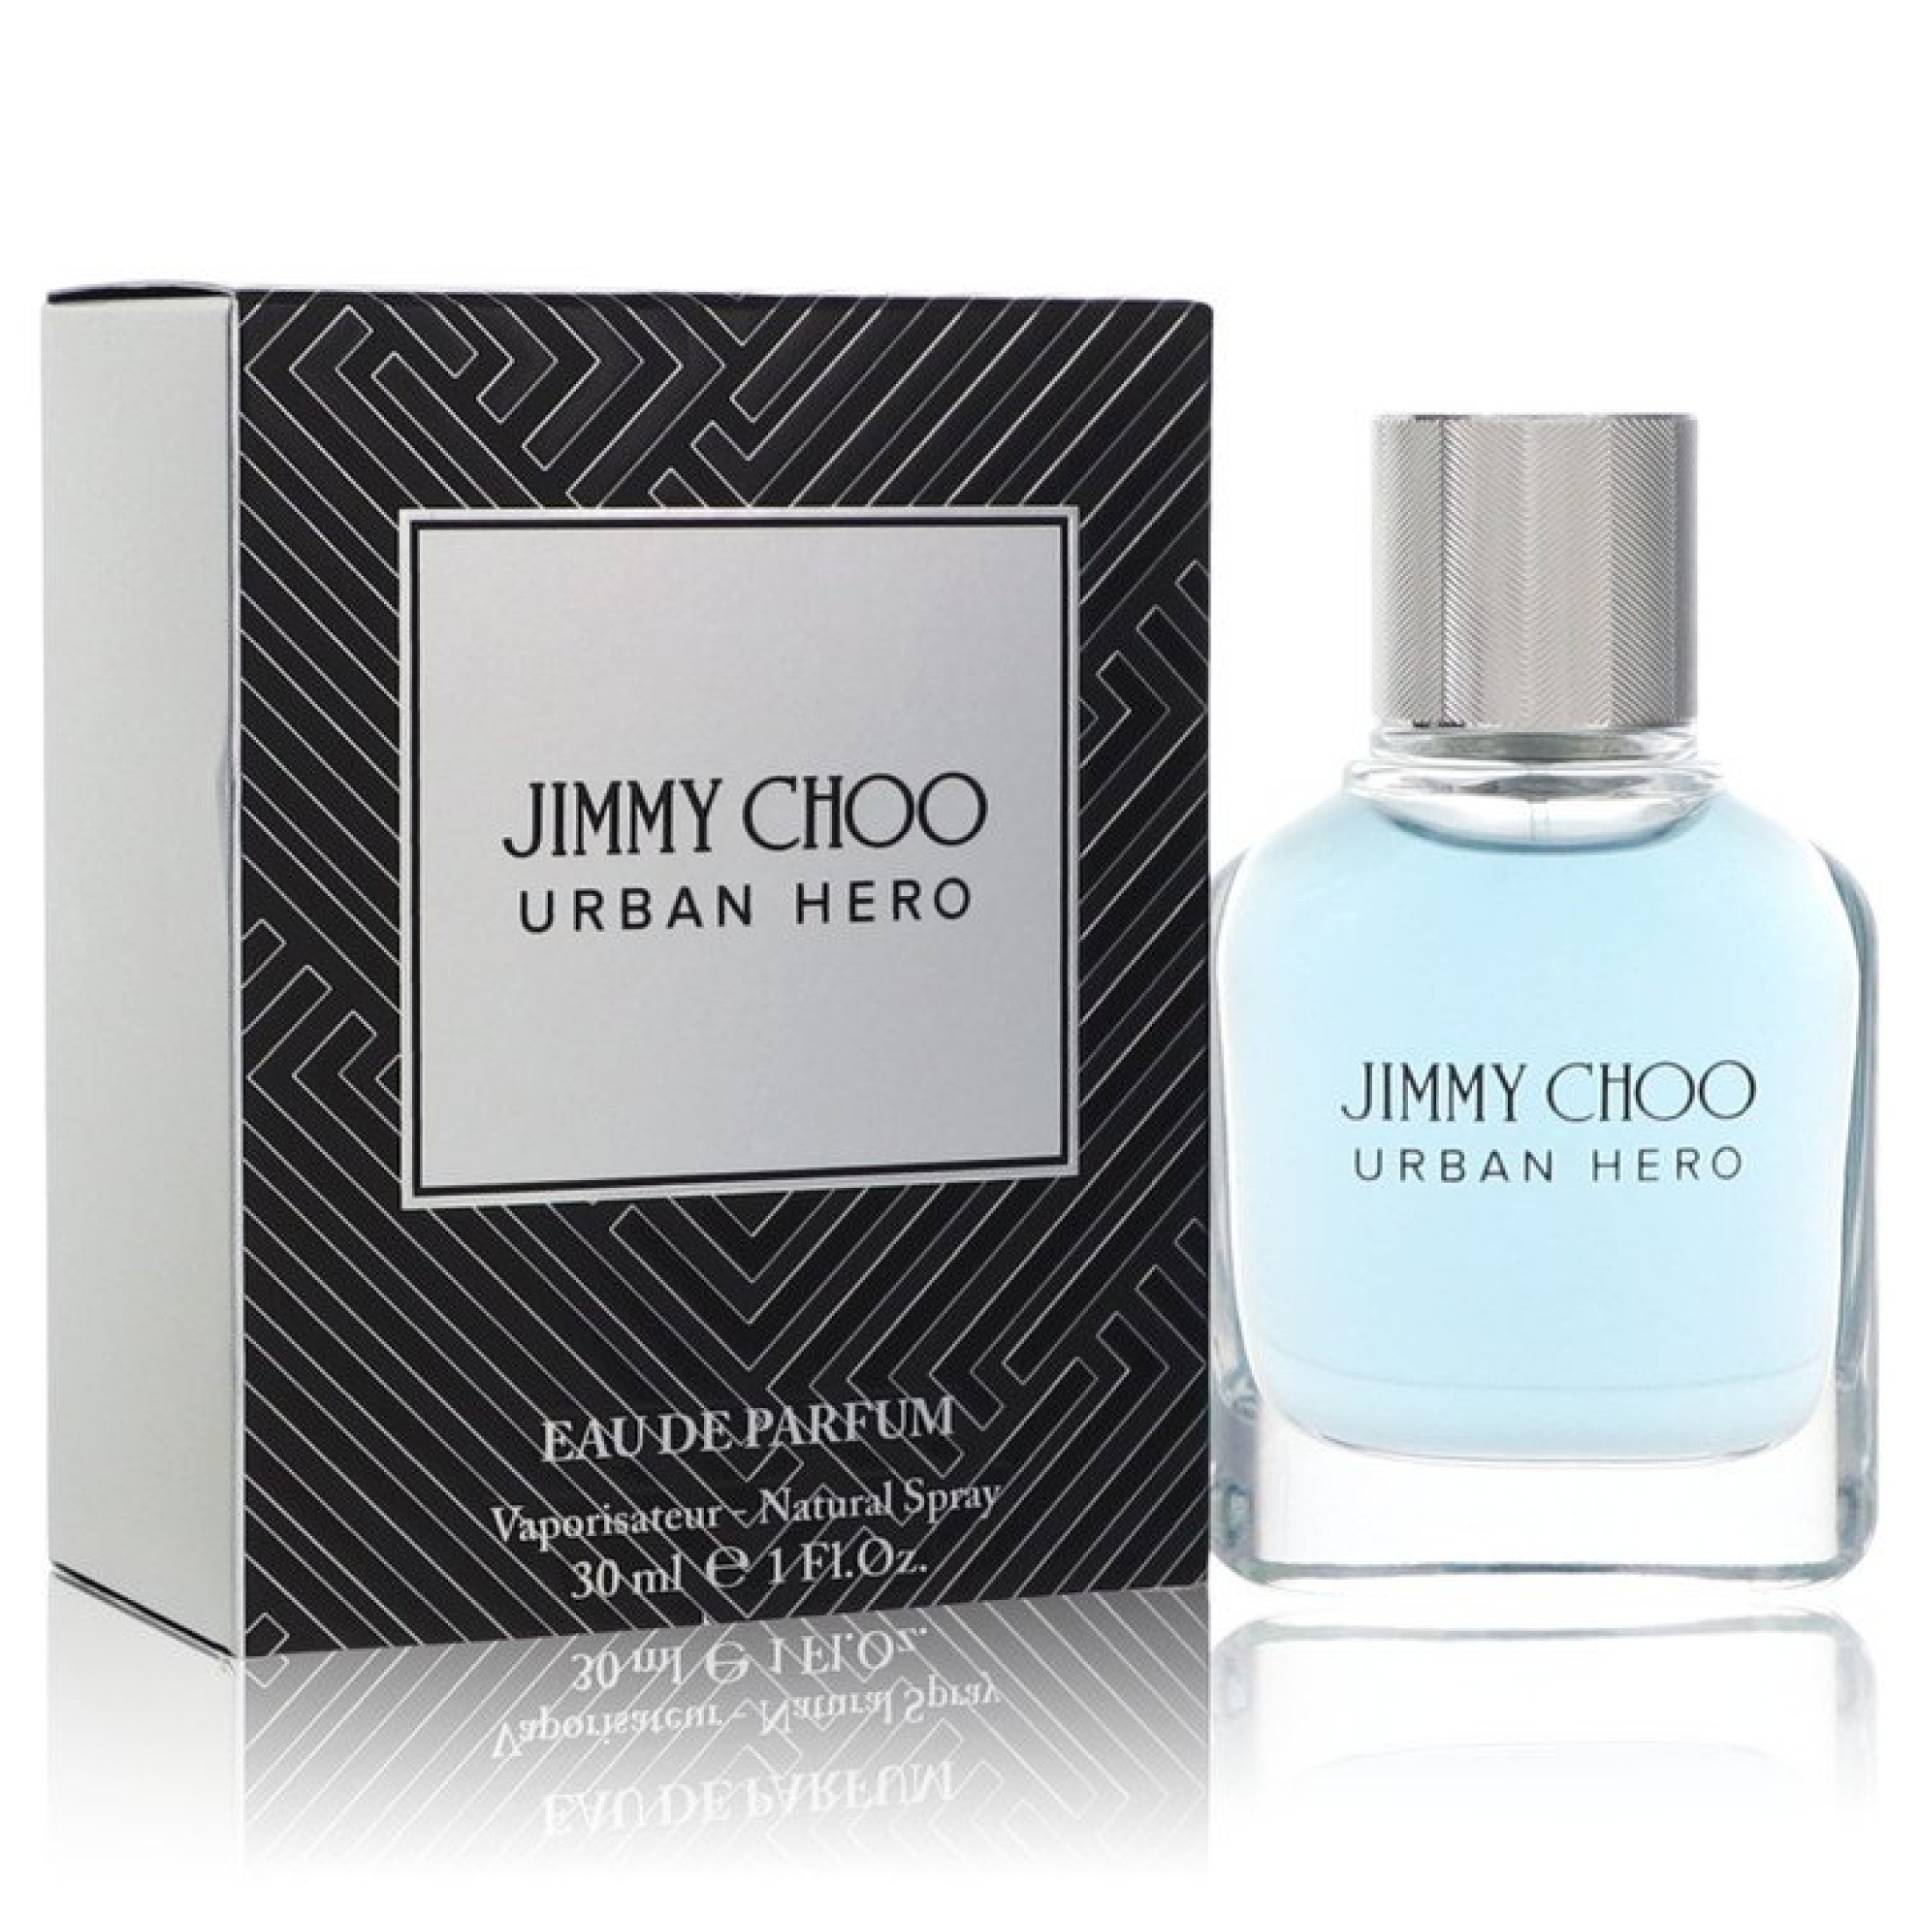 Jimmy Choo Urban Hero Eau De Parfum Spray 30 ml von Jimmy Choo